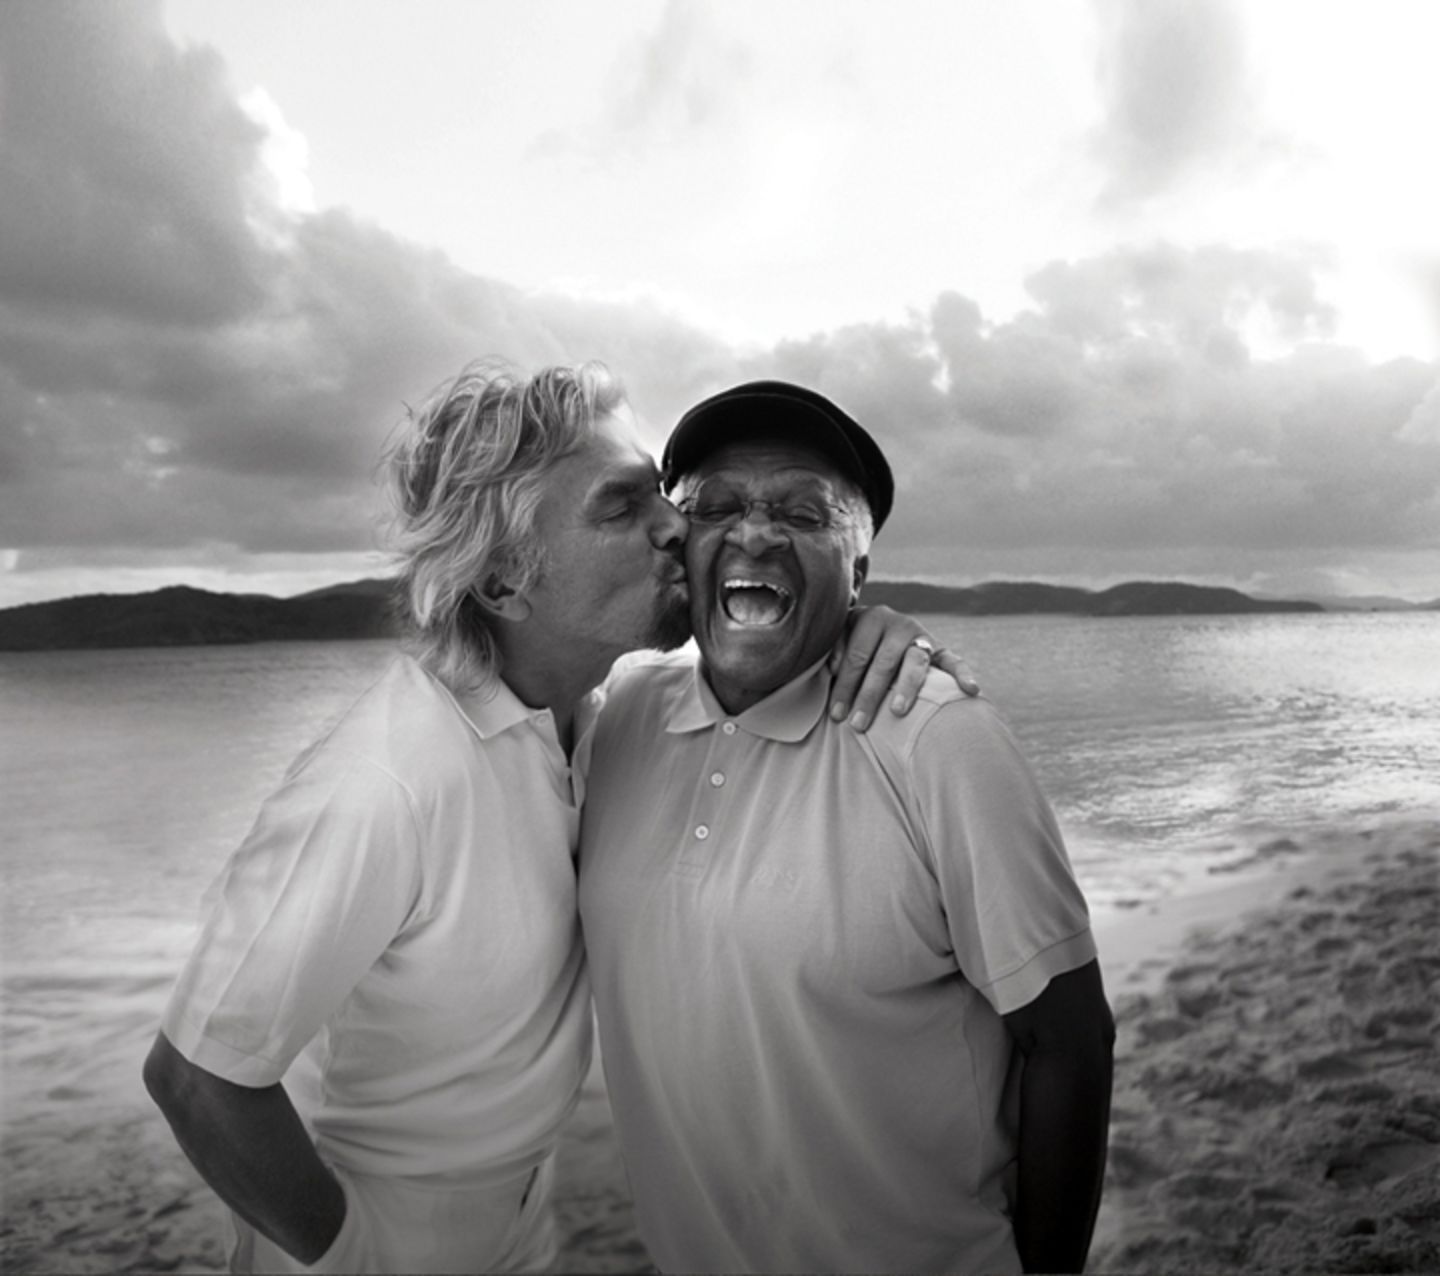 Richard and Desmond Tutu